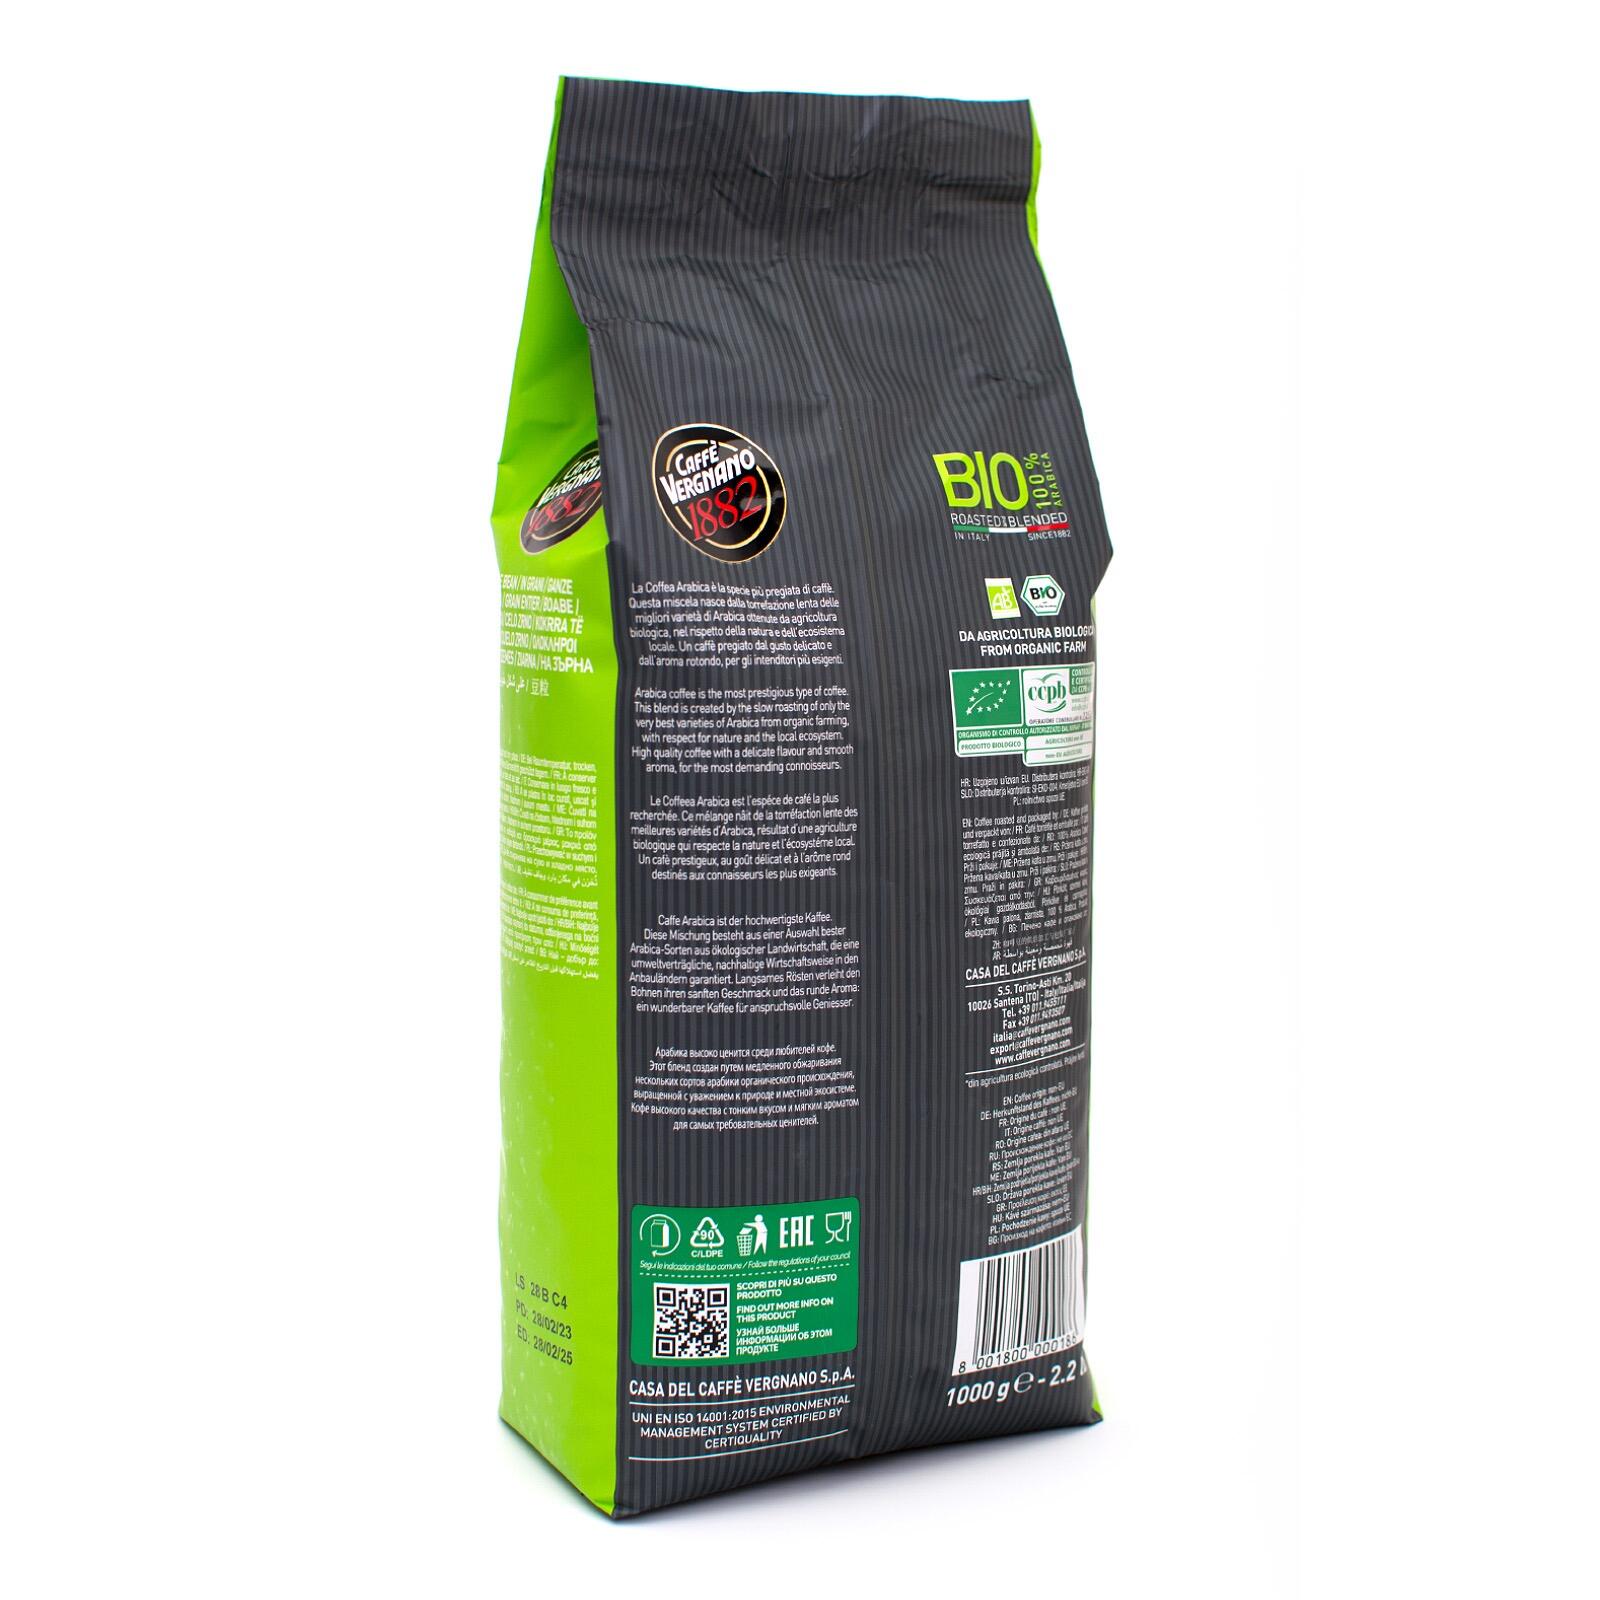 Caffè Vergnano 1882 Arabica Bio en grains aux Arômes délicats - 1kg